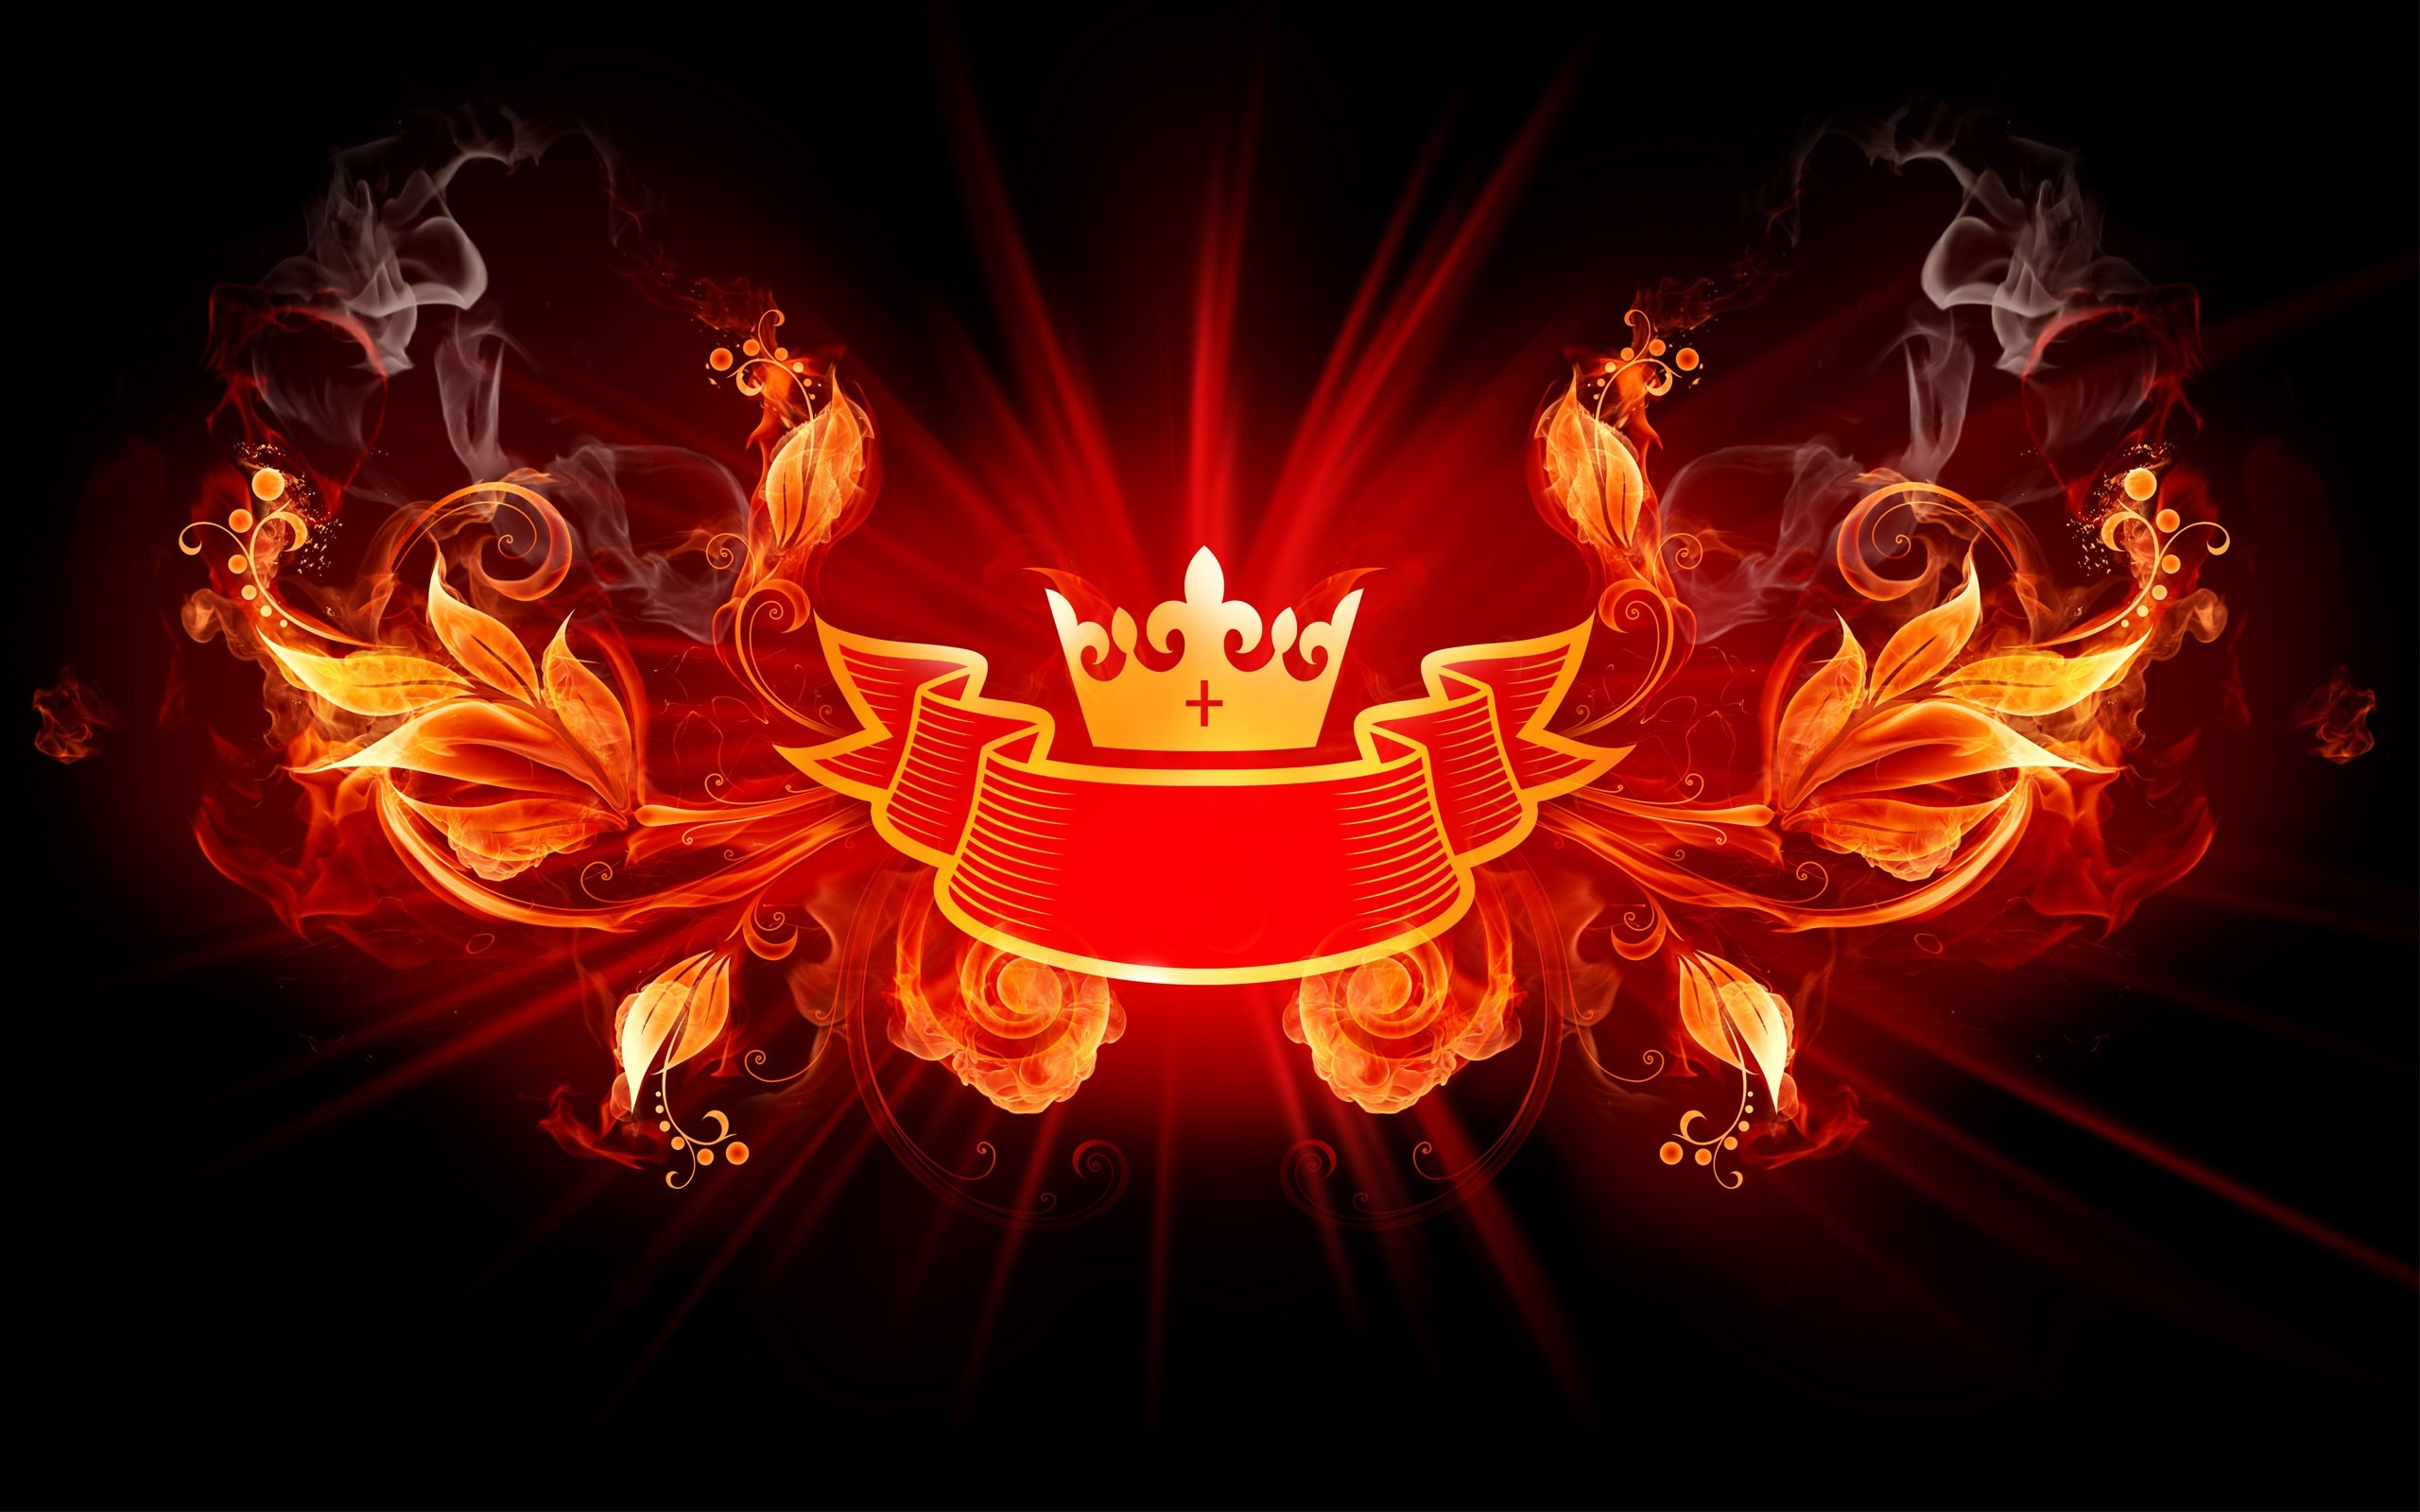 King of Fire Design HD Wide